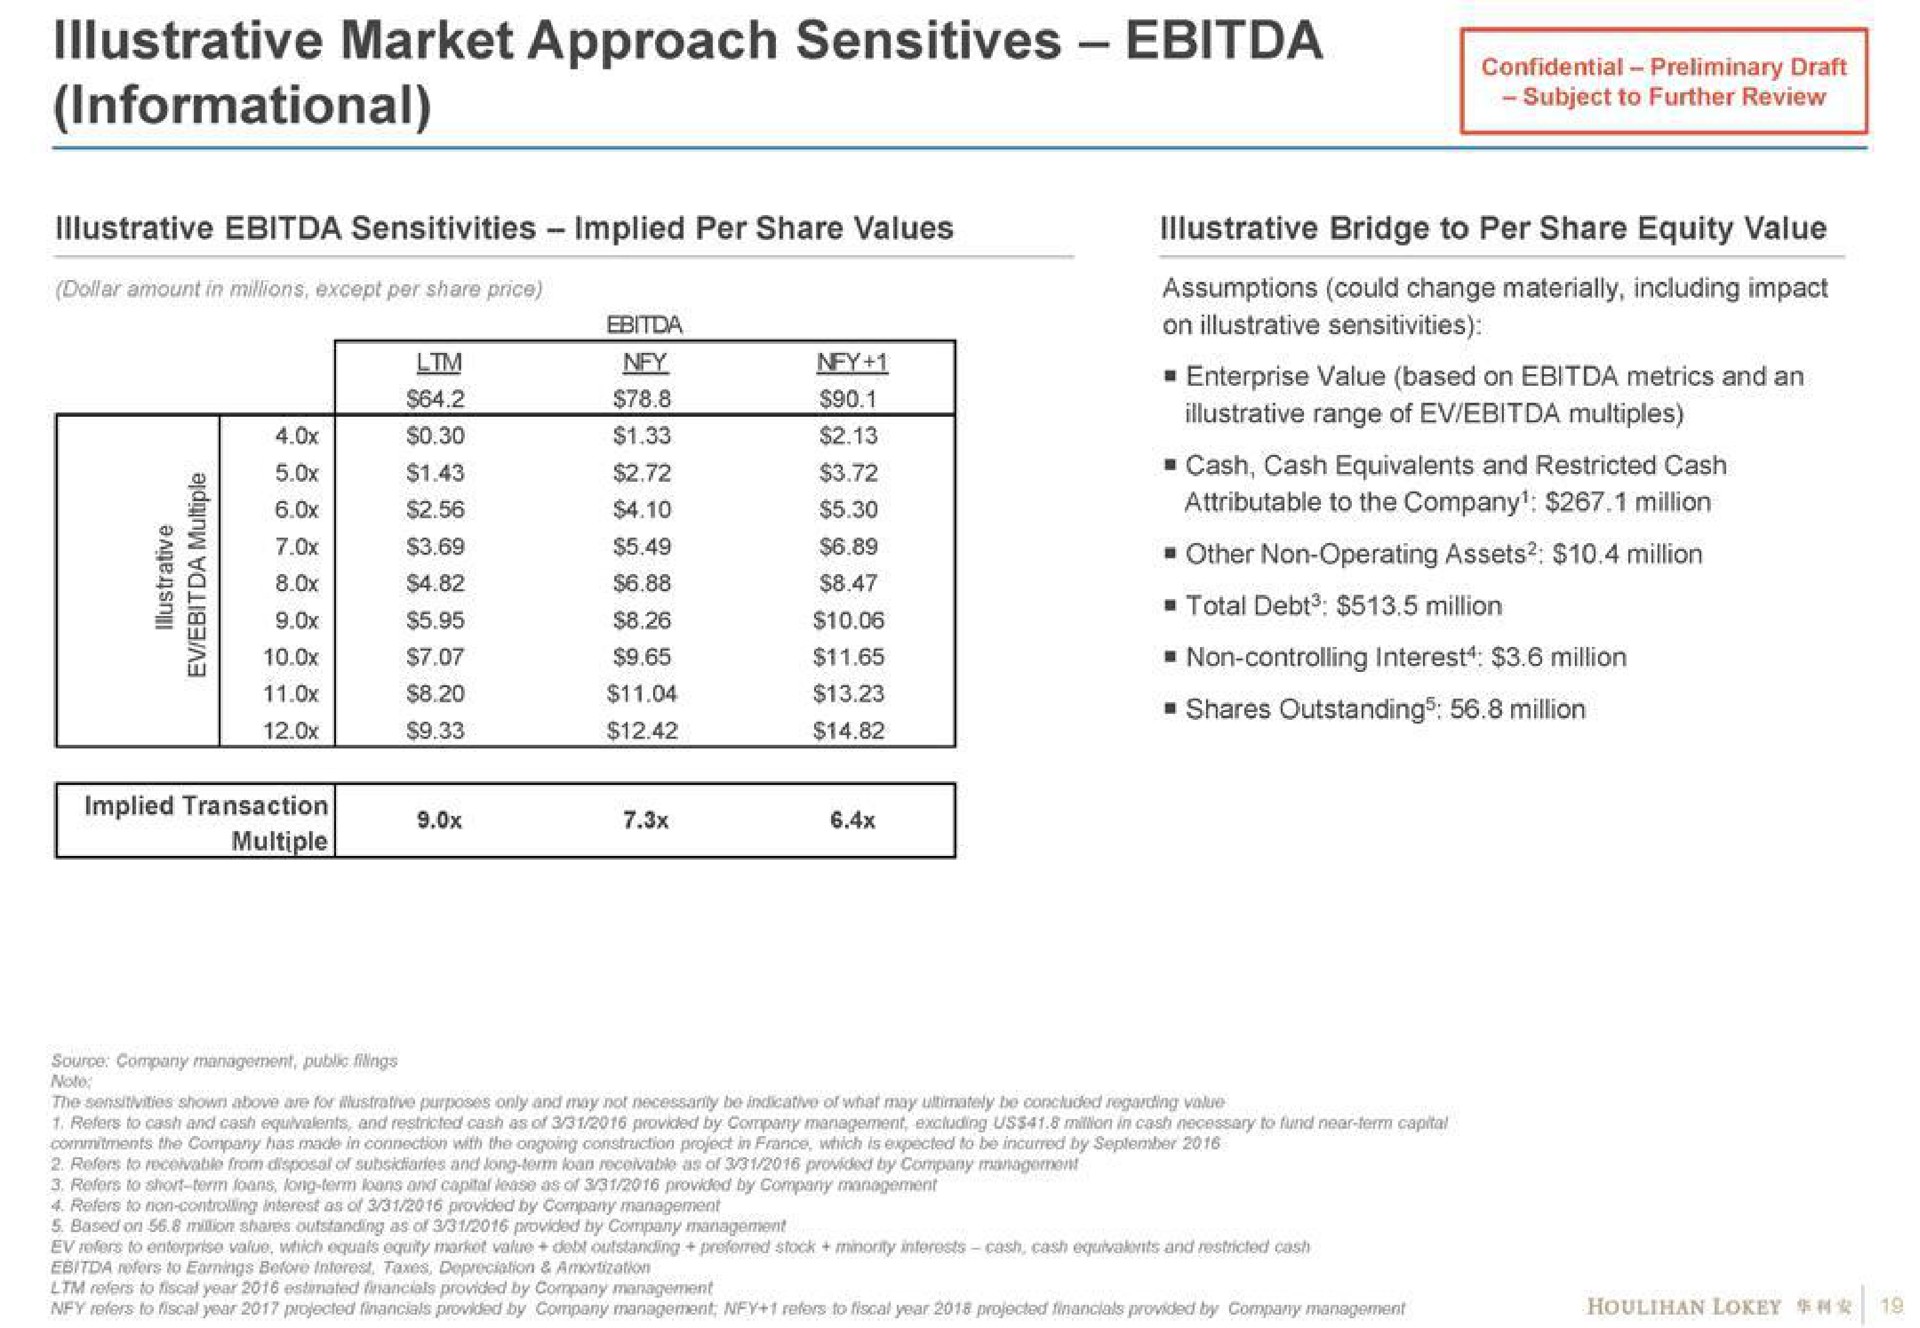 illustrative market approach sensitives illustrative sensitivities implied per share values illustrative bridge to per share equity value | Houlihan Lokey